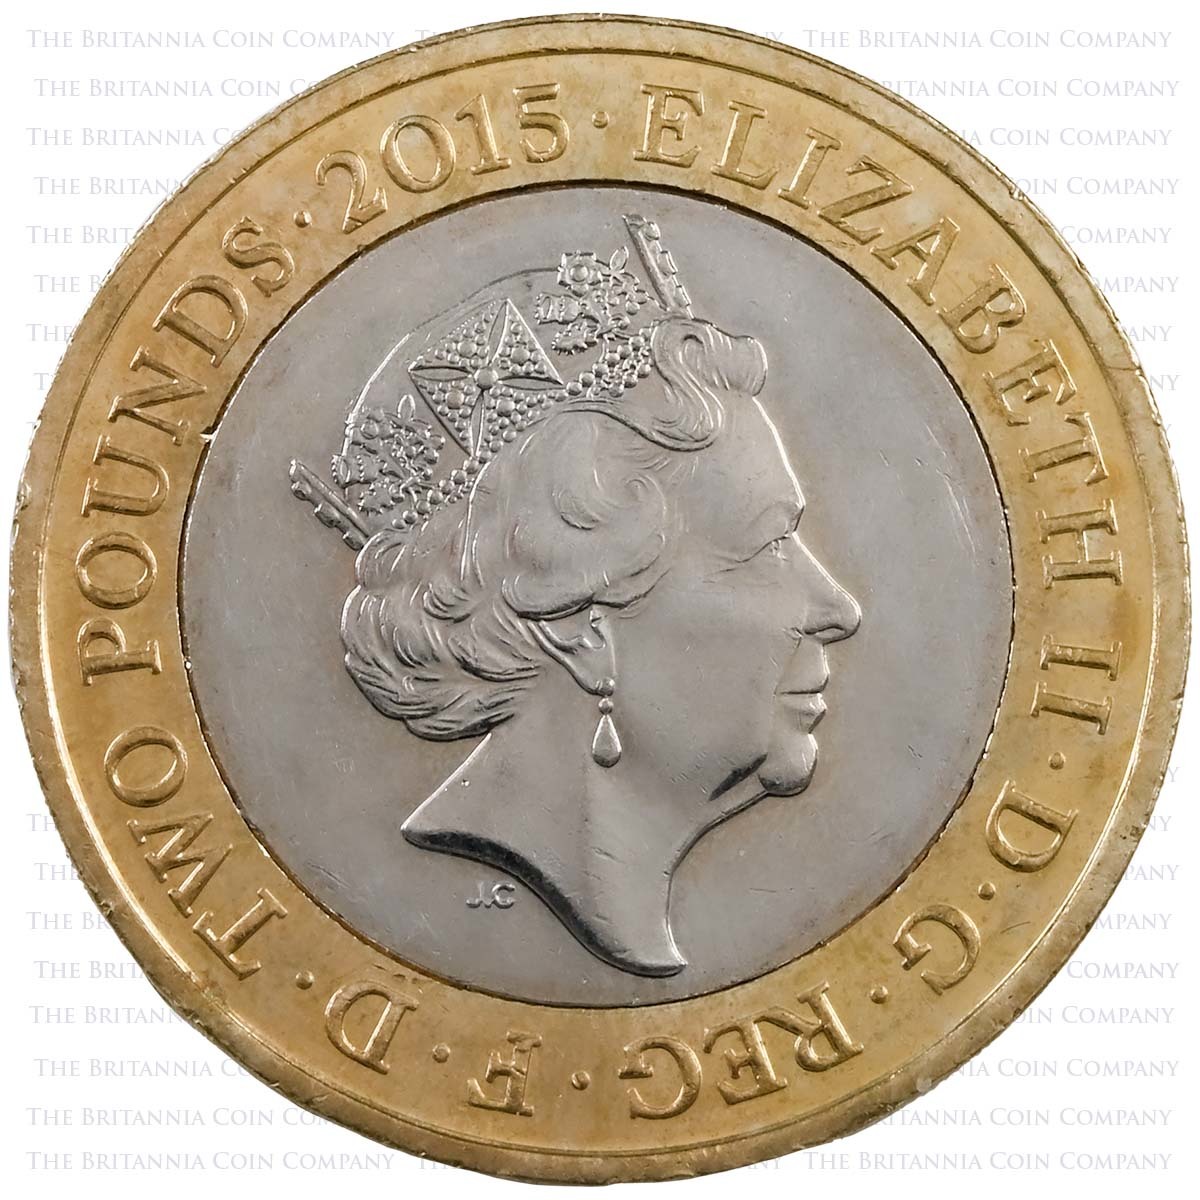 2015 Magna Carta Circulated Two Pound Coin Obverse